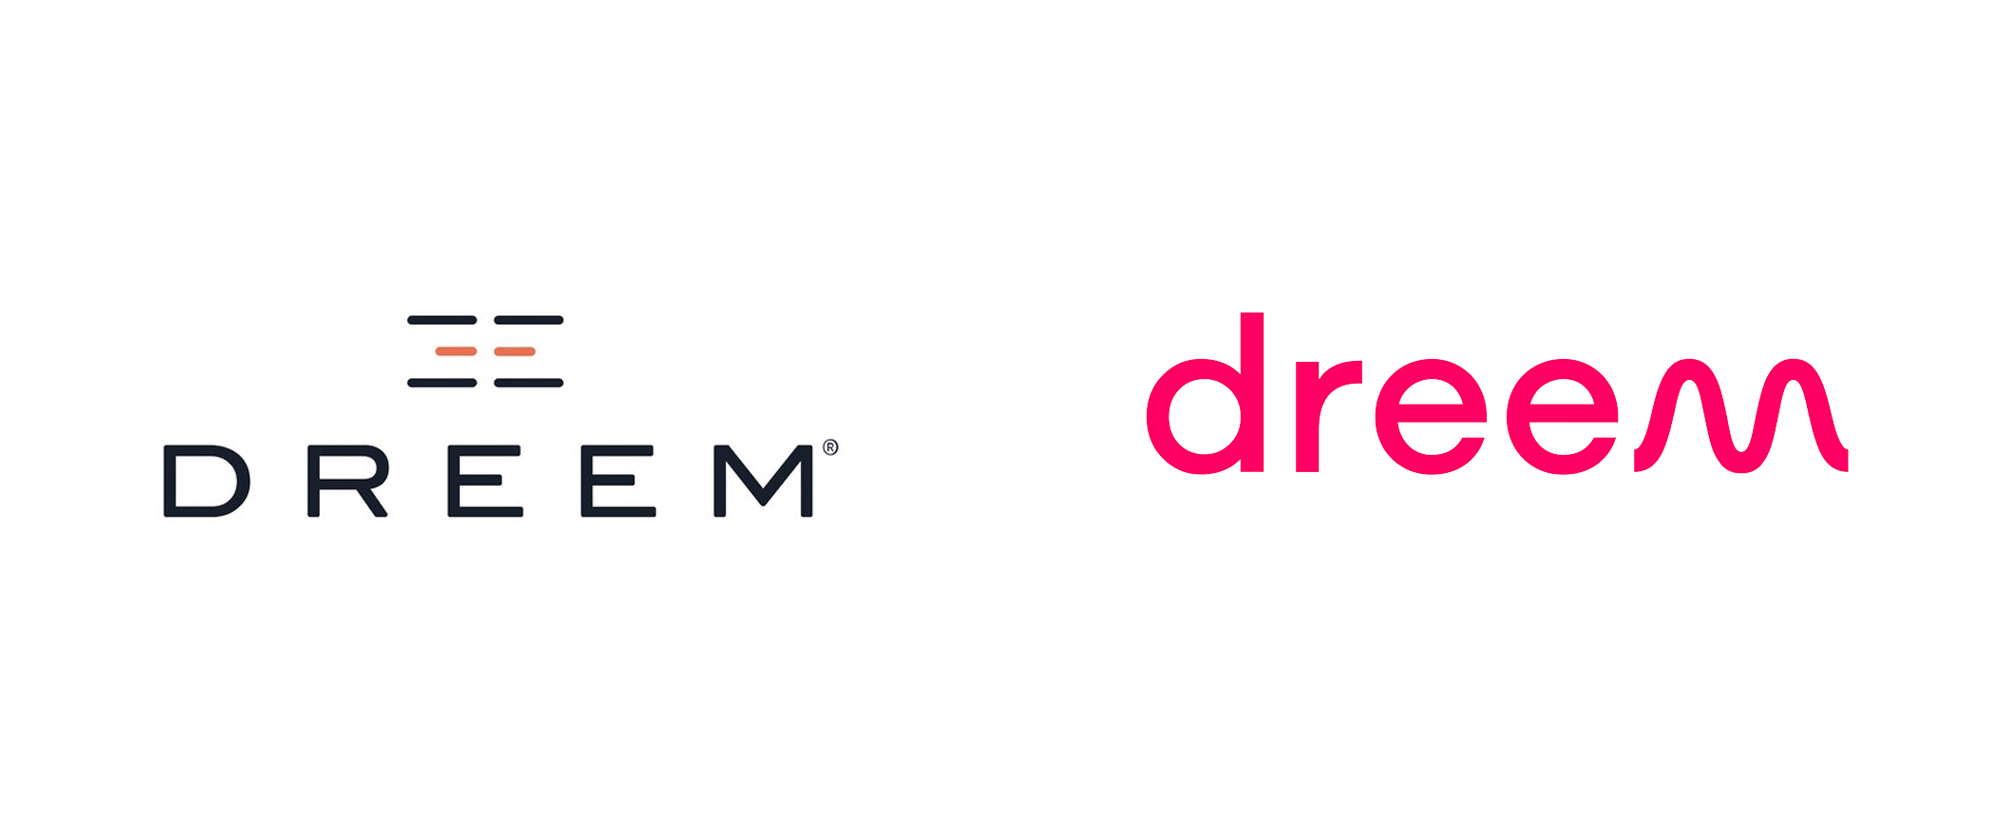 New Logo and Identity for Dreem by venturethree